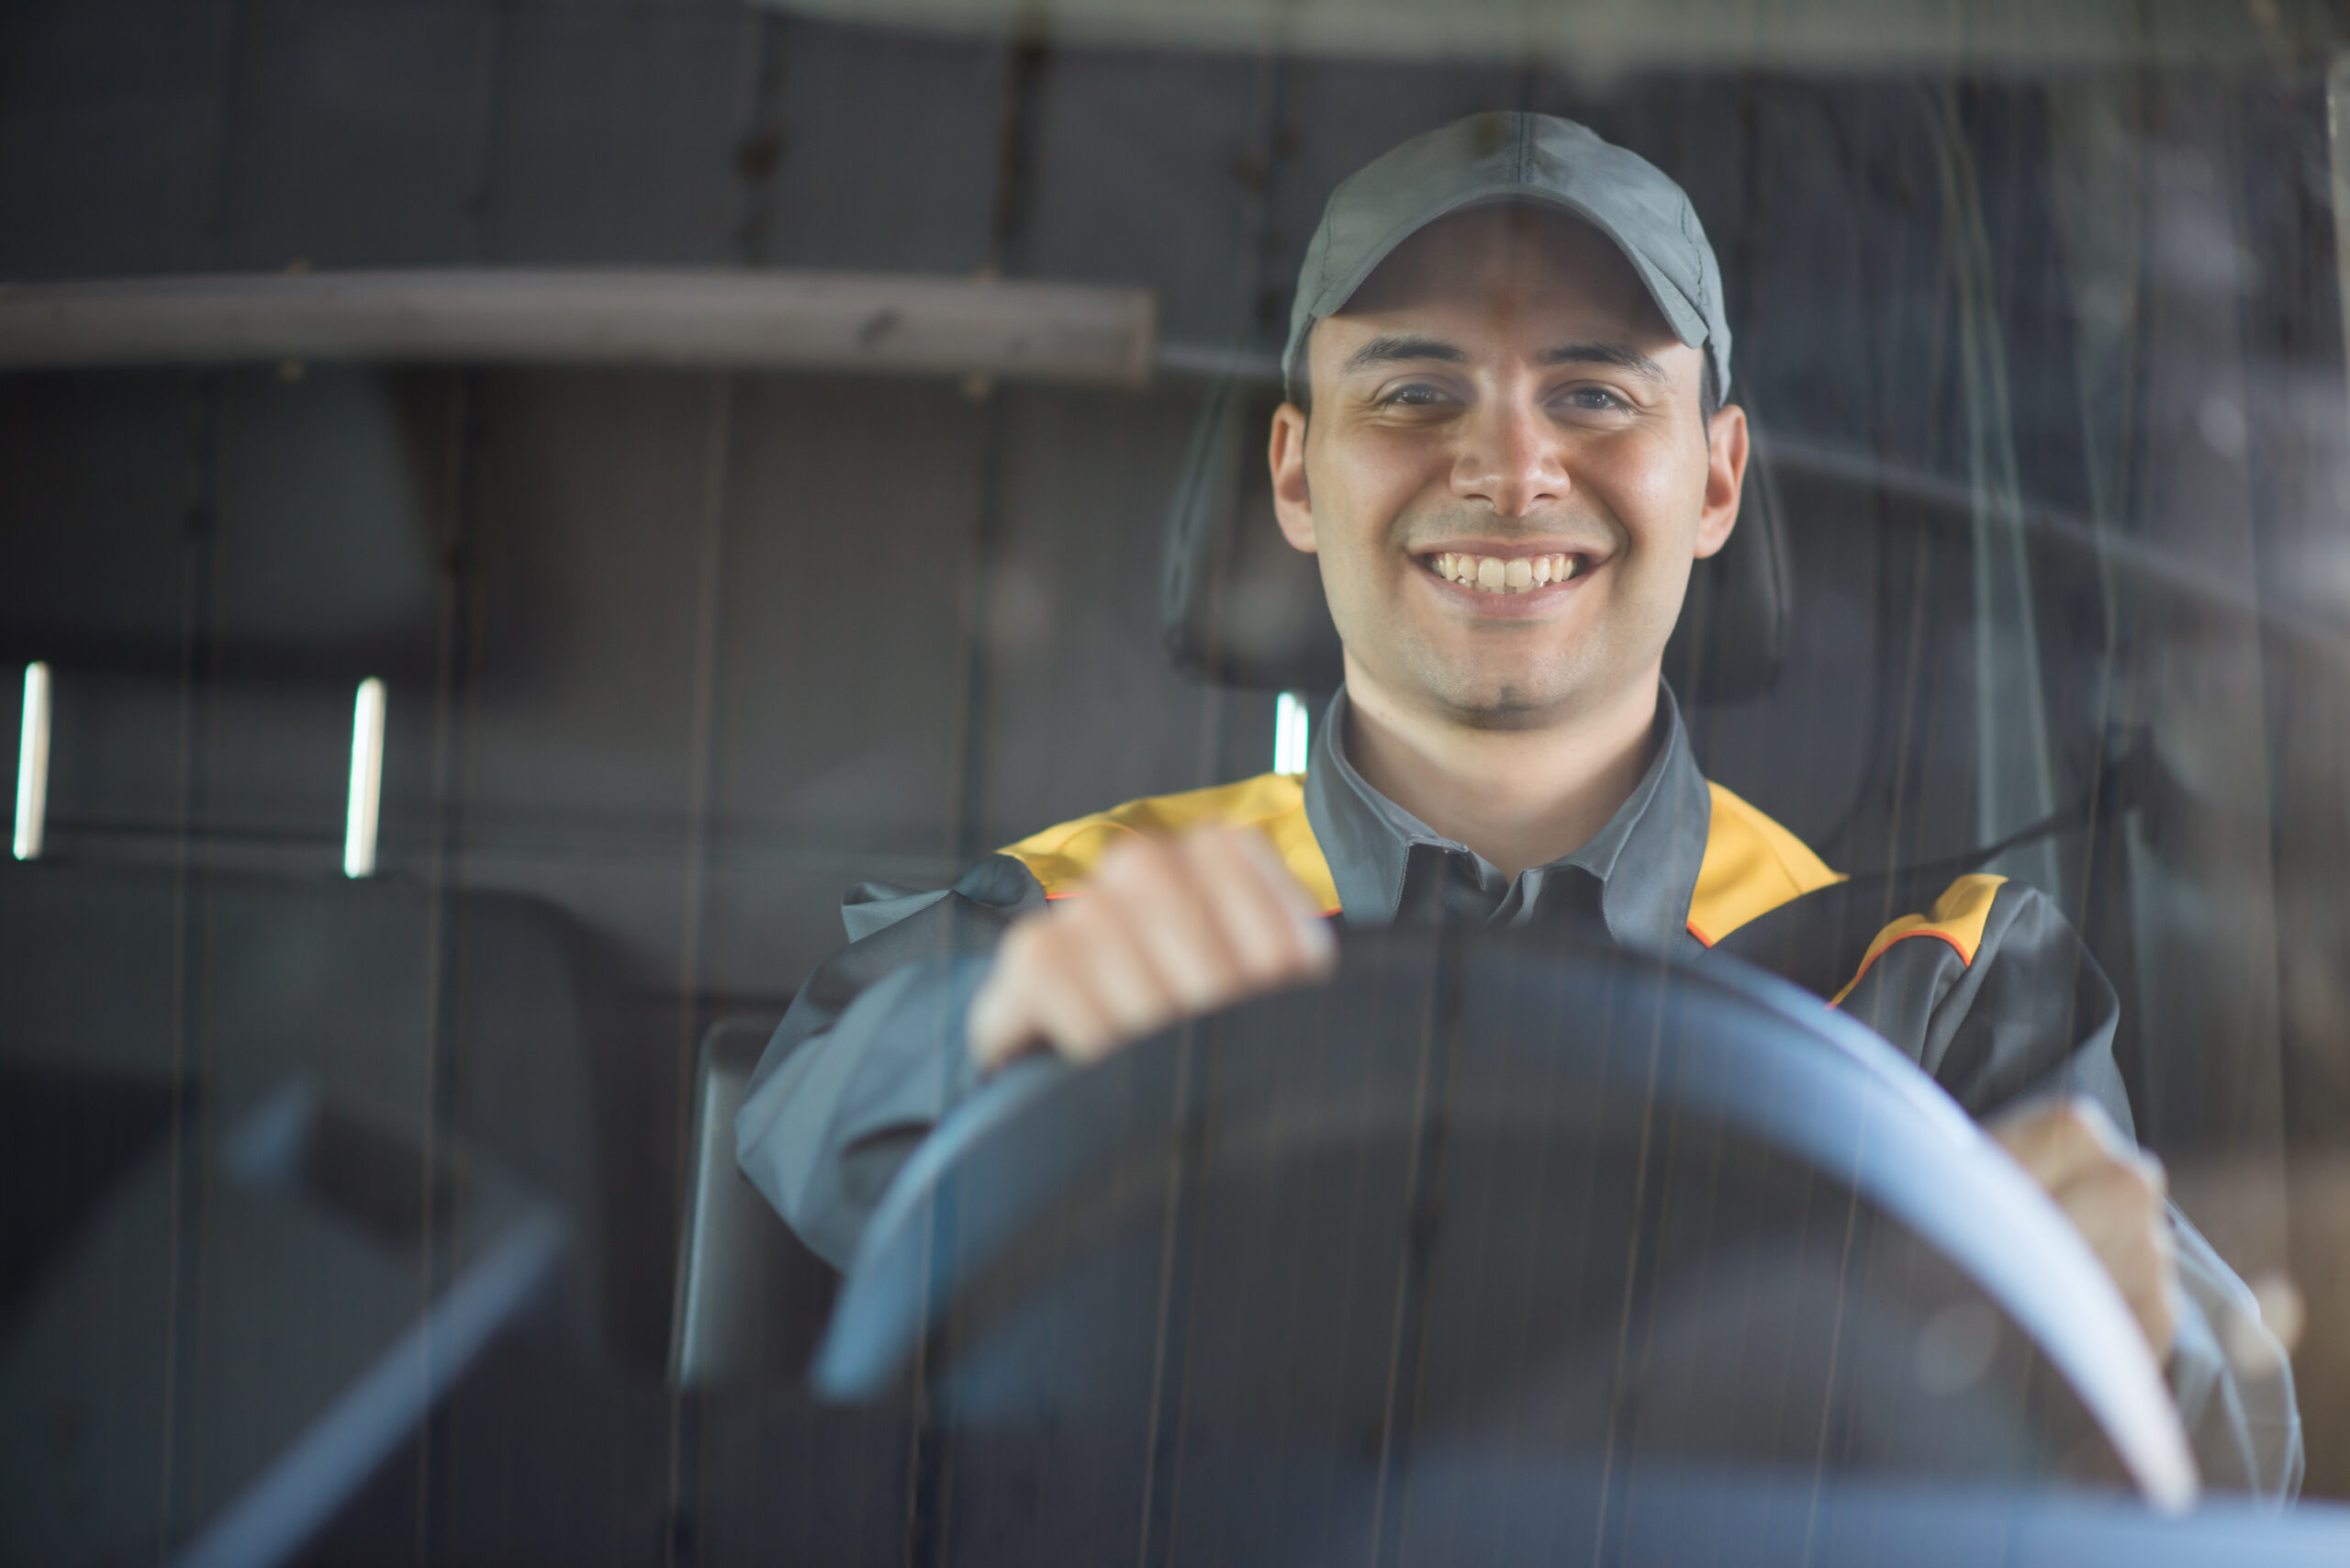 Man holding the van steering wheel and smiling